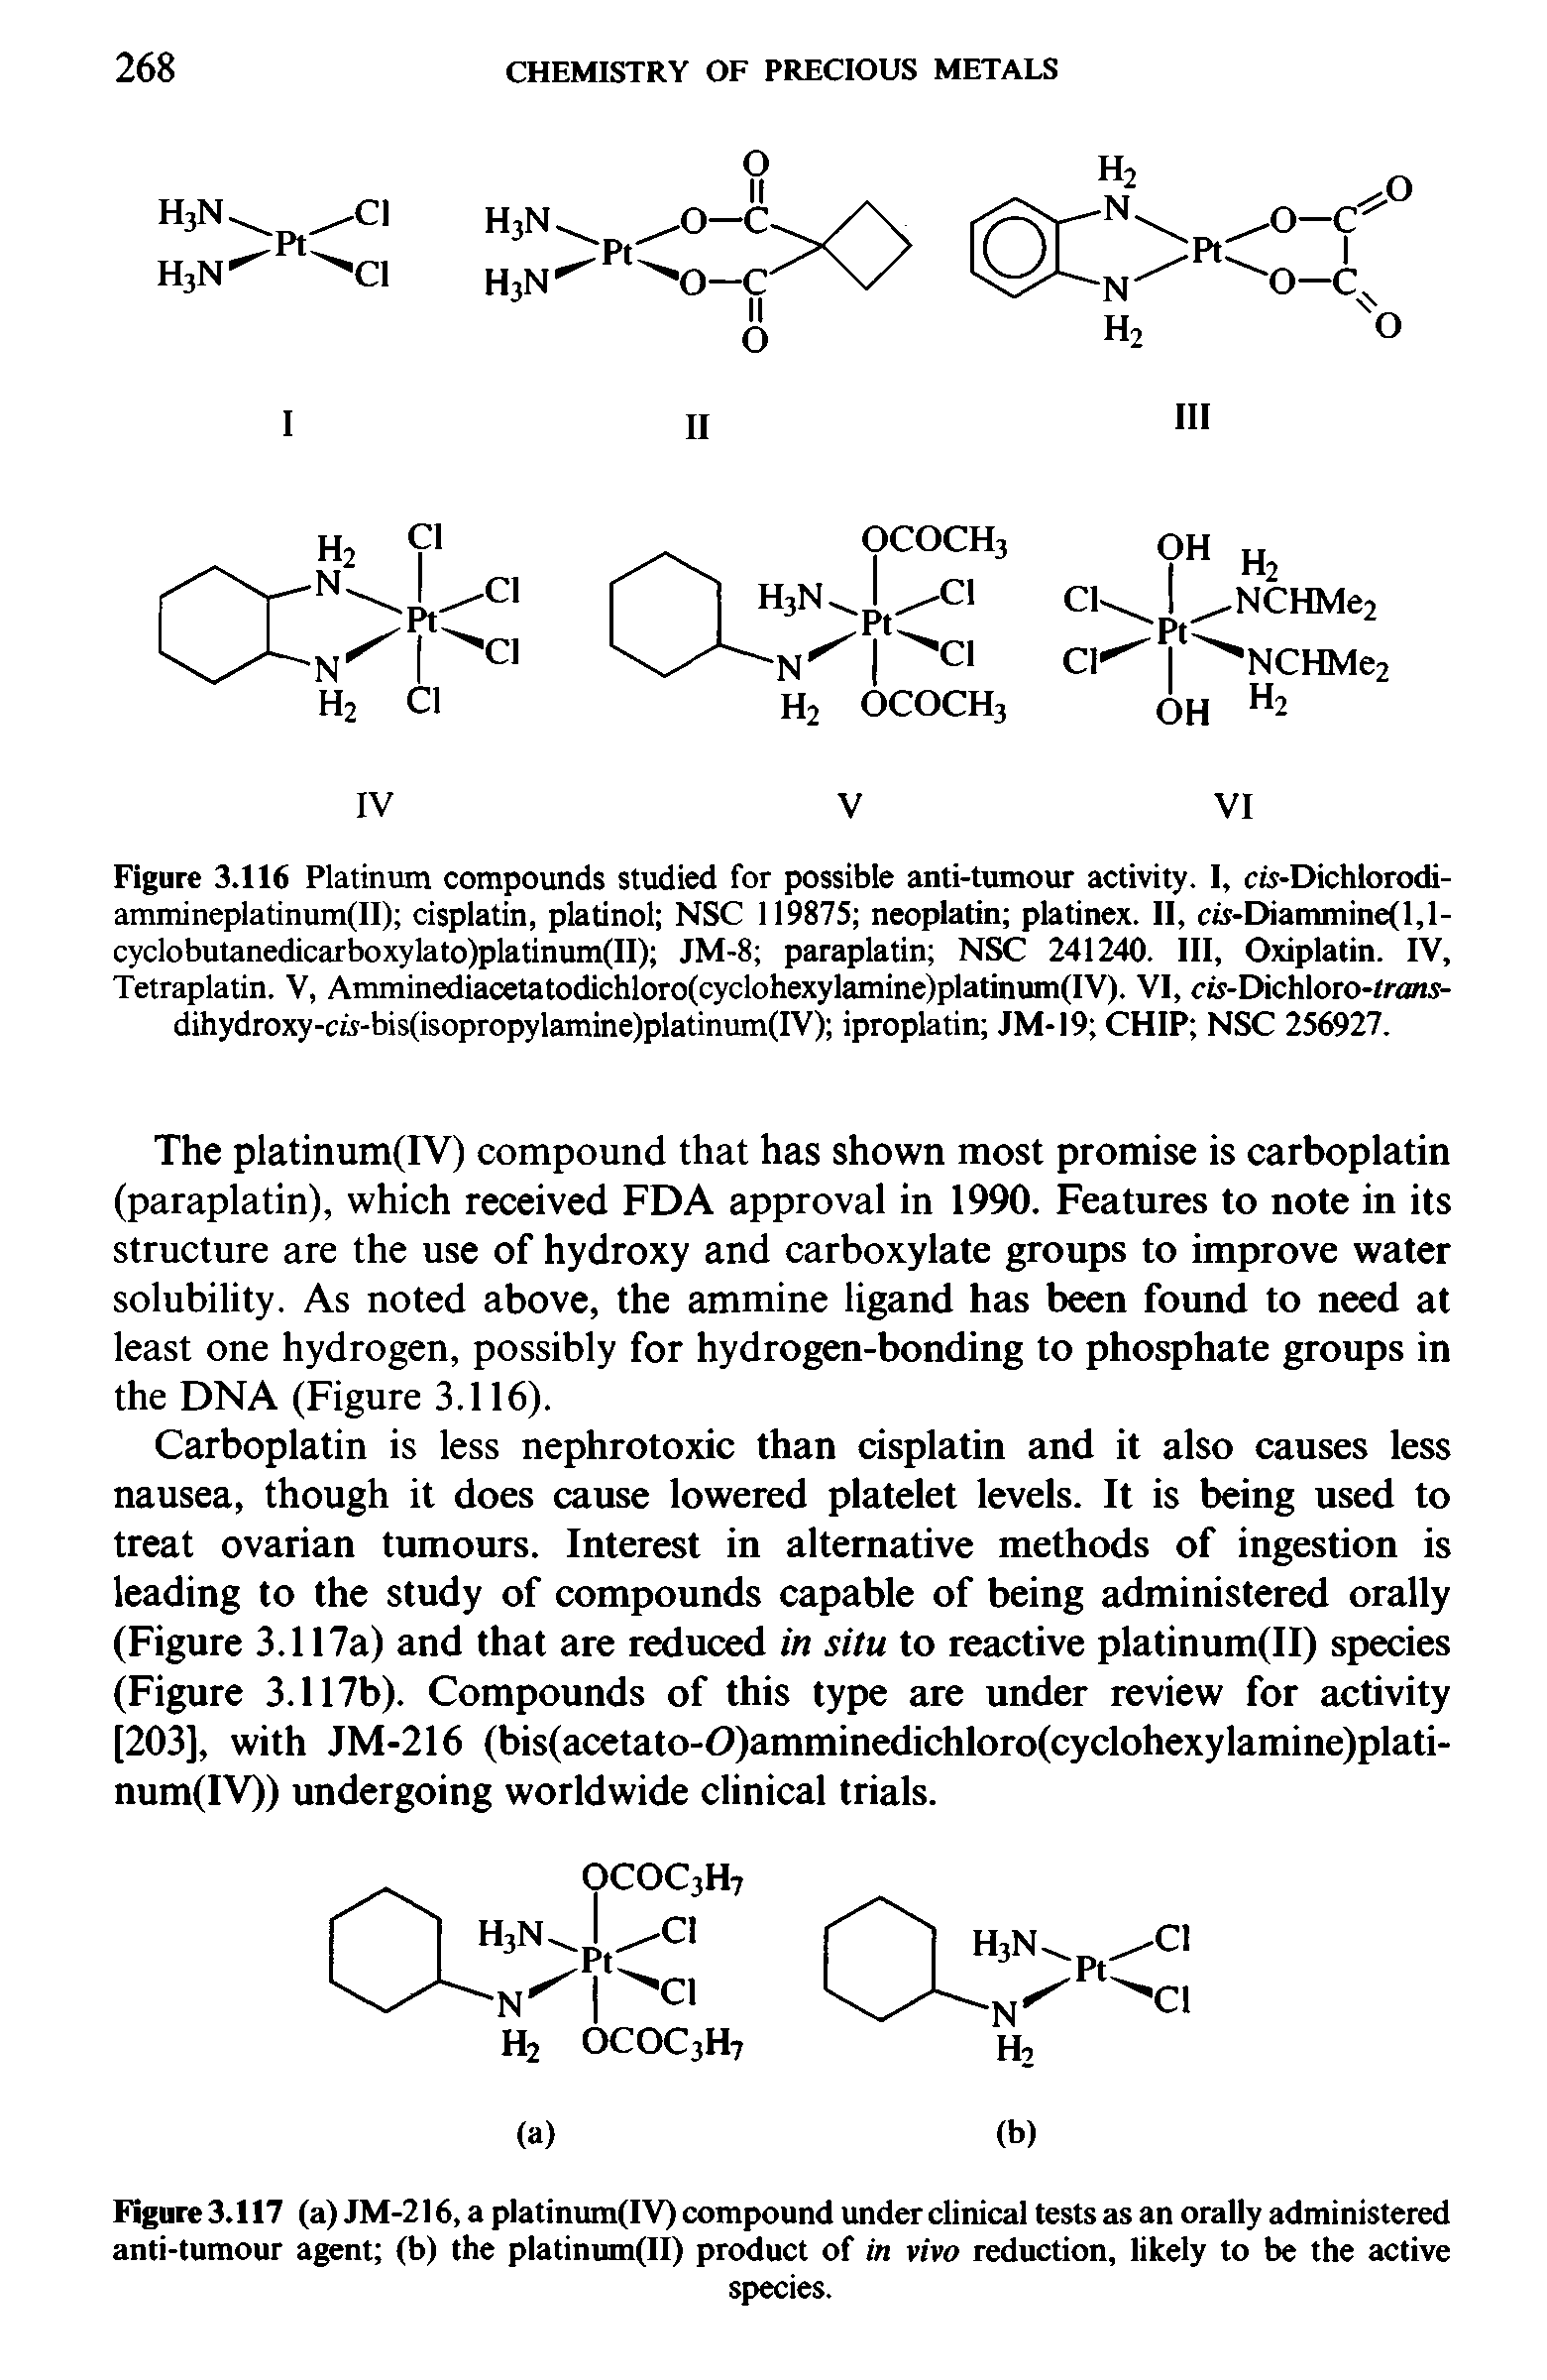 Figure 3.116 Platinum compounds studied for possible anti-tumour activity. I, cw-Dichlorodi-ammineplatinum(II) cisplatin, platinol NSC 119875 neoplatin platinex. II, s-Diammine(l,l-cyclobutanedicarboxylato)platinum(II) JM-8 paraplatin NSC 241240. Ill, Oxiplatin. IV, Tetraplatin. V, Amminediacetatodichloro(cyclohexylamine)platinum(IV). VI, cis-Dichloro-trans-dihydroxy-cu-bis(isopropylamine)platinum(IV) iproplatin JM-19 CHIP NSC 256927.